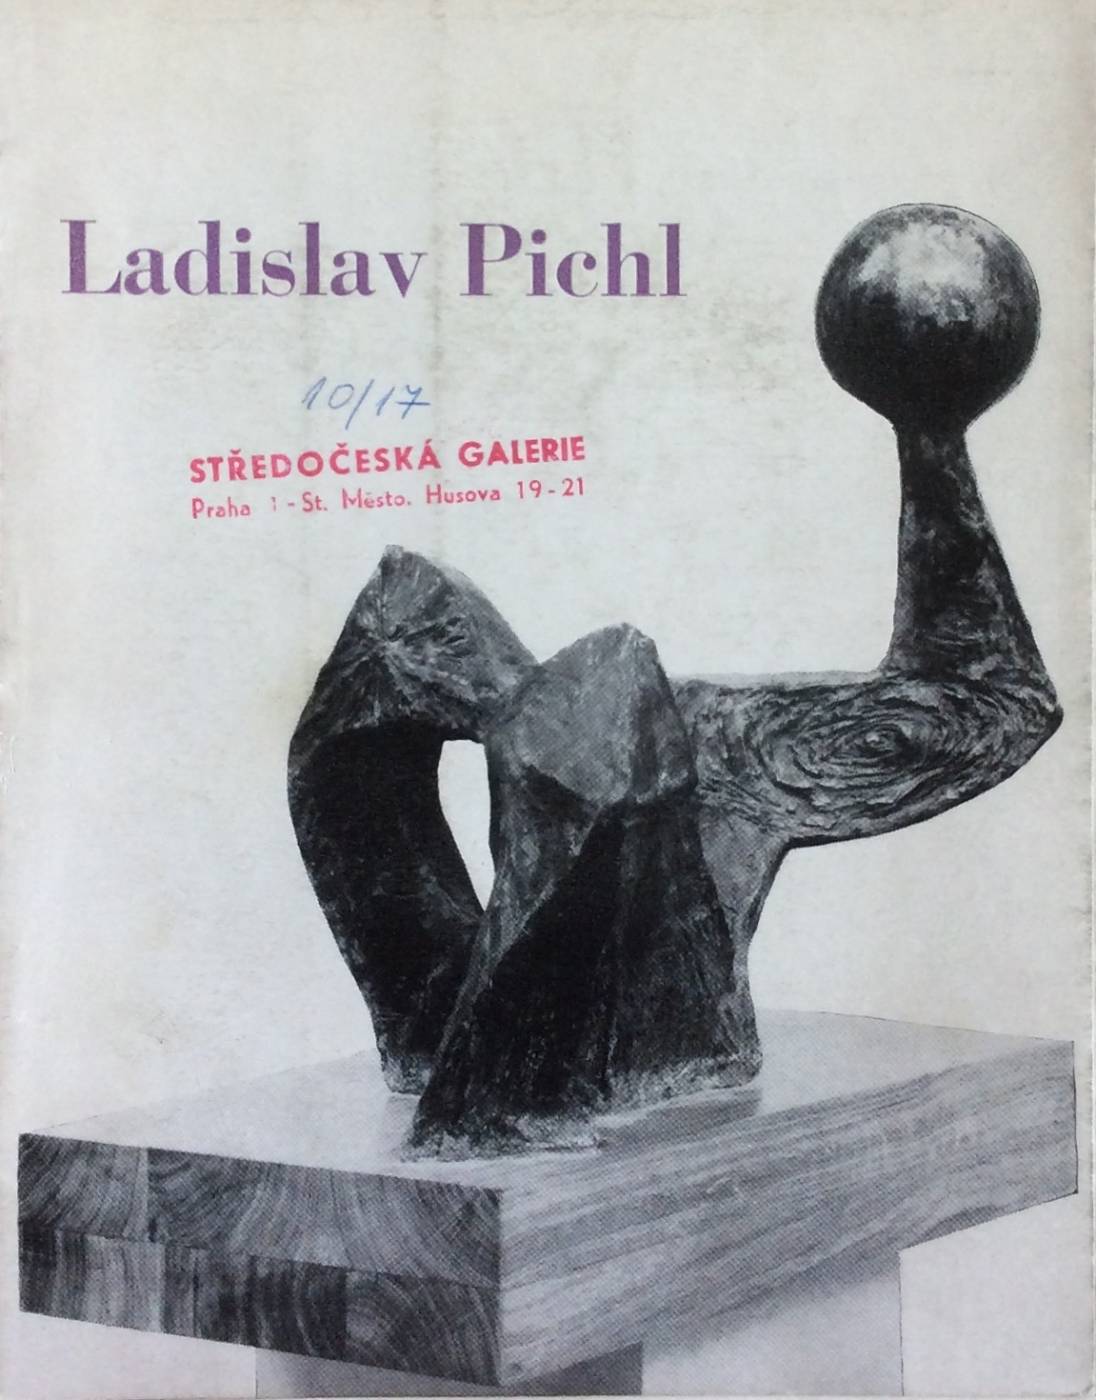 Ladislav Pichl